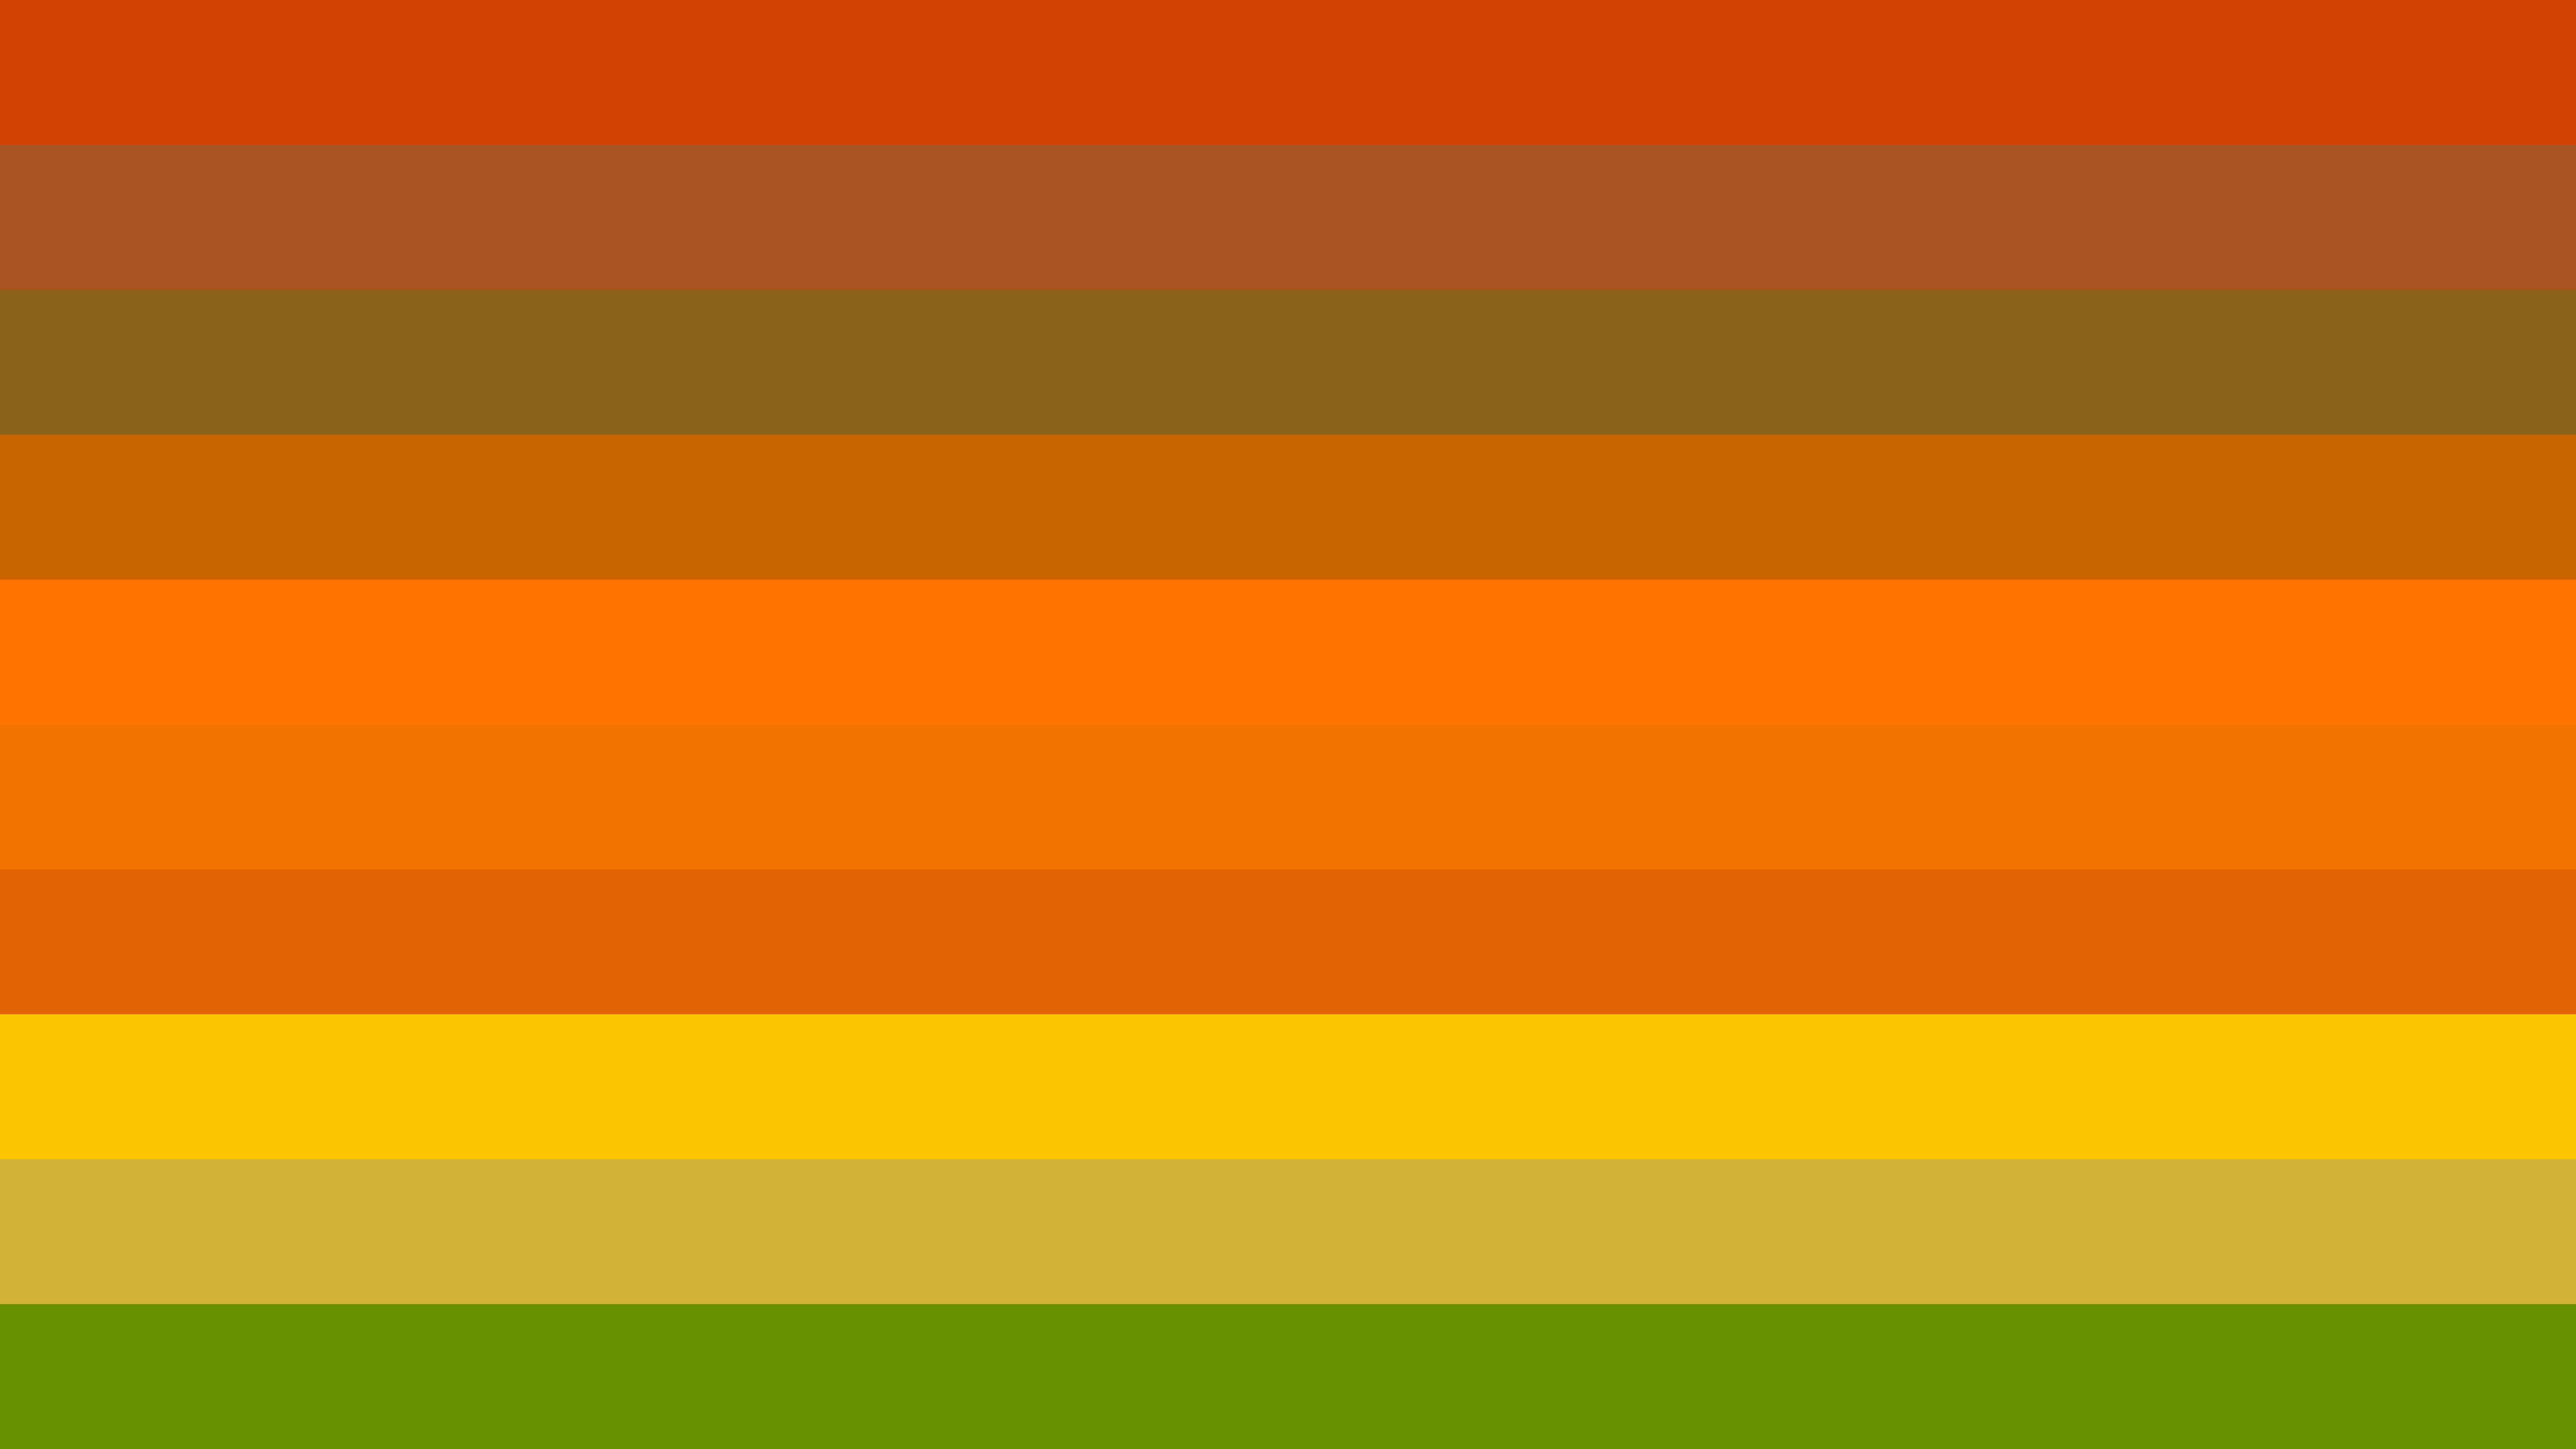 Free Orange and Green Stripes Background